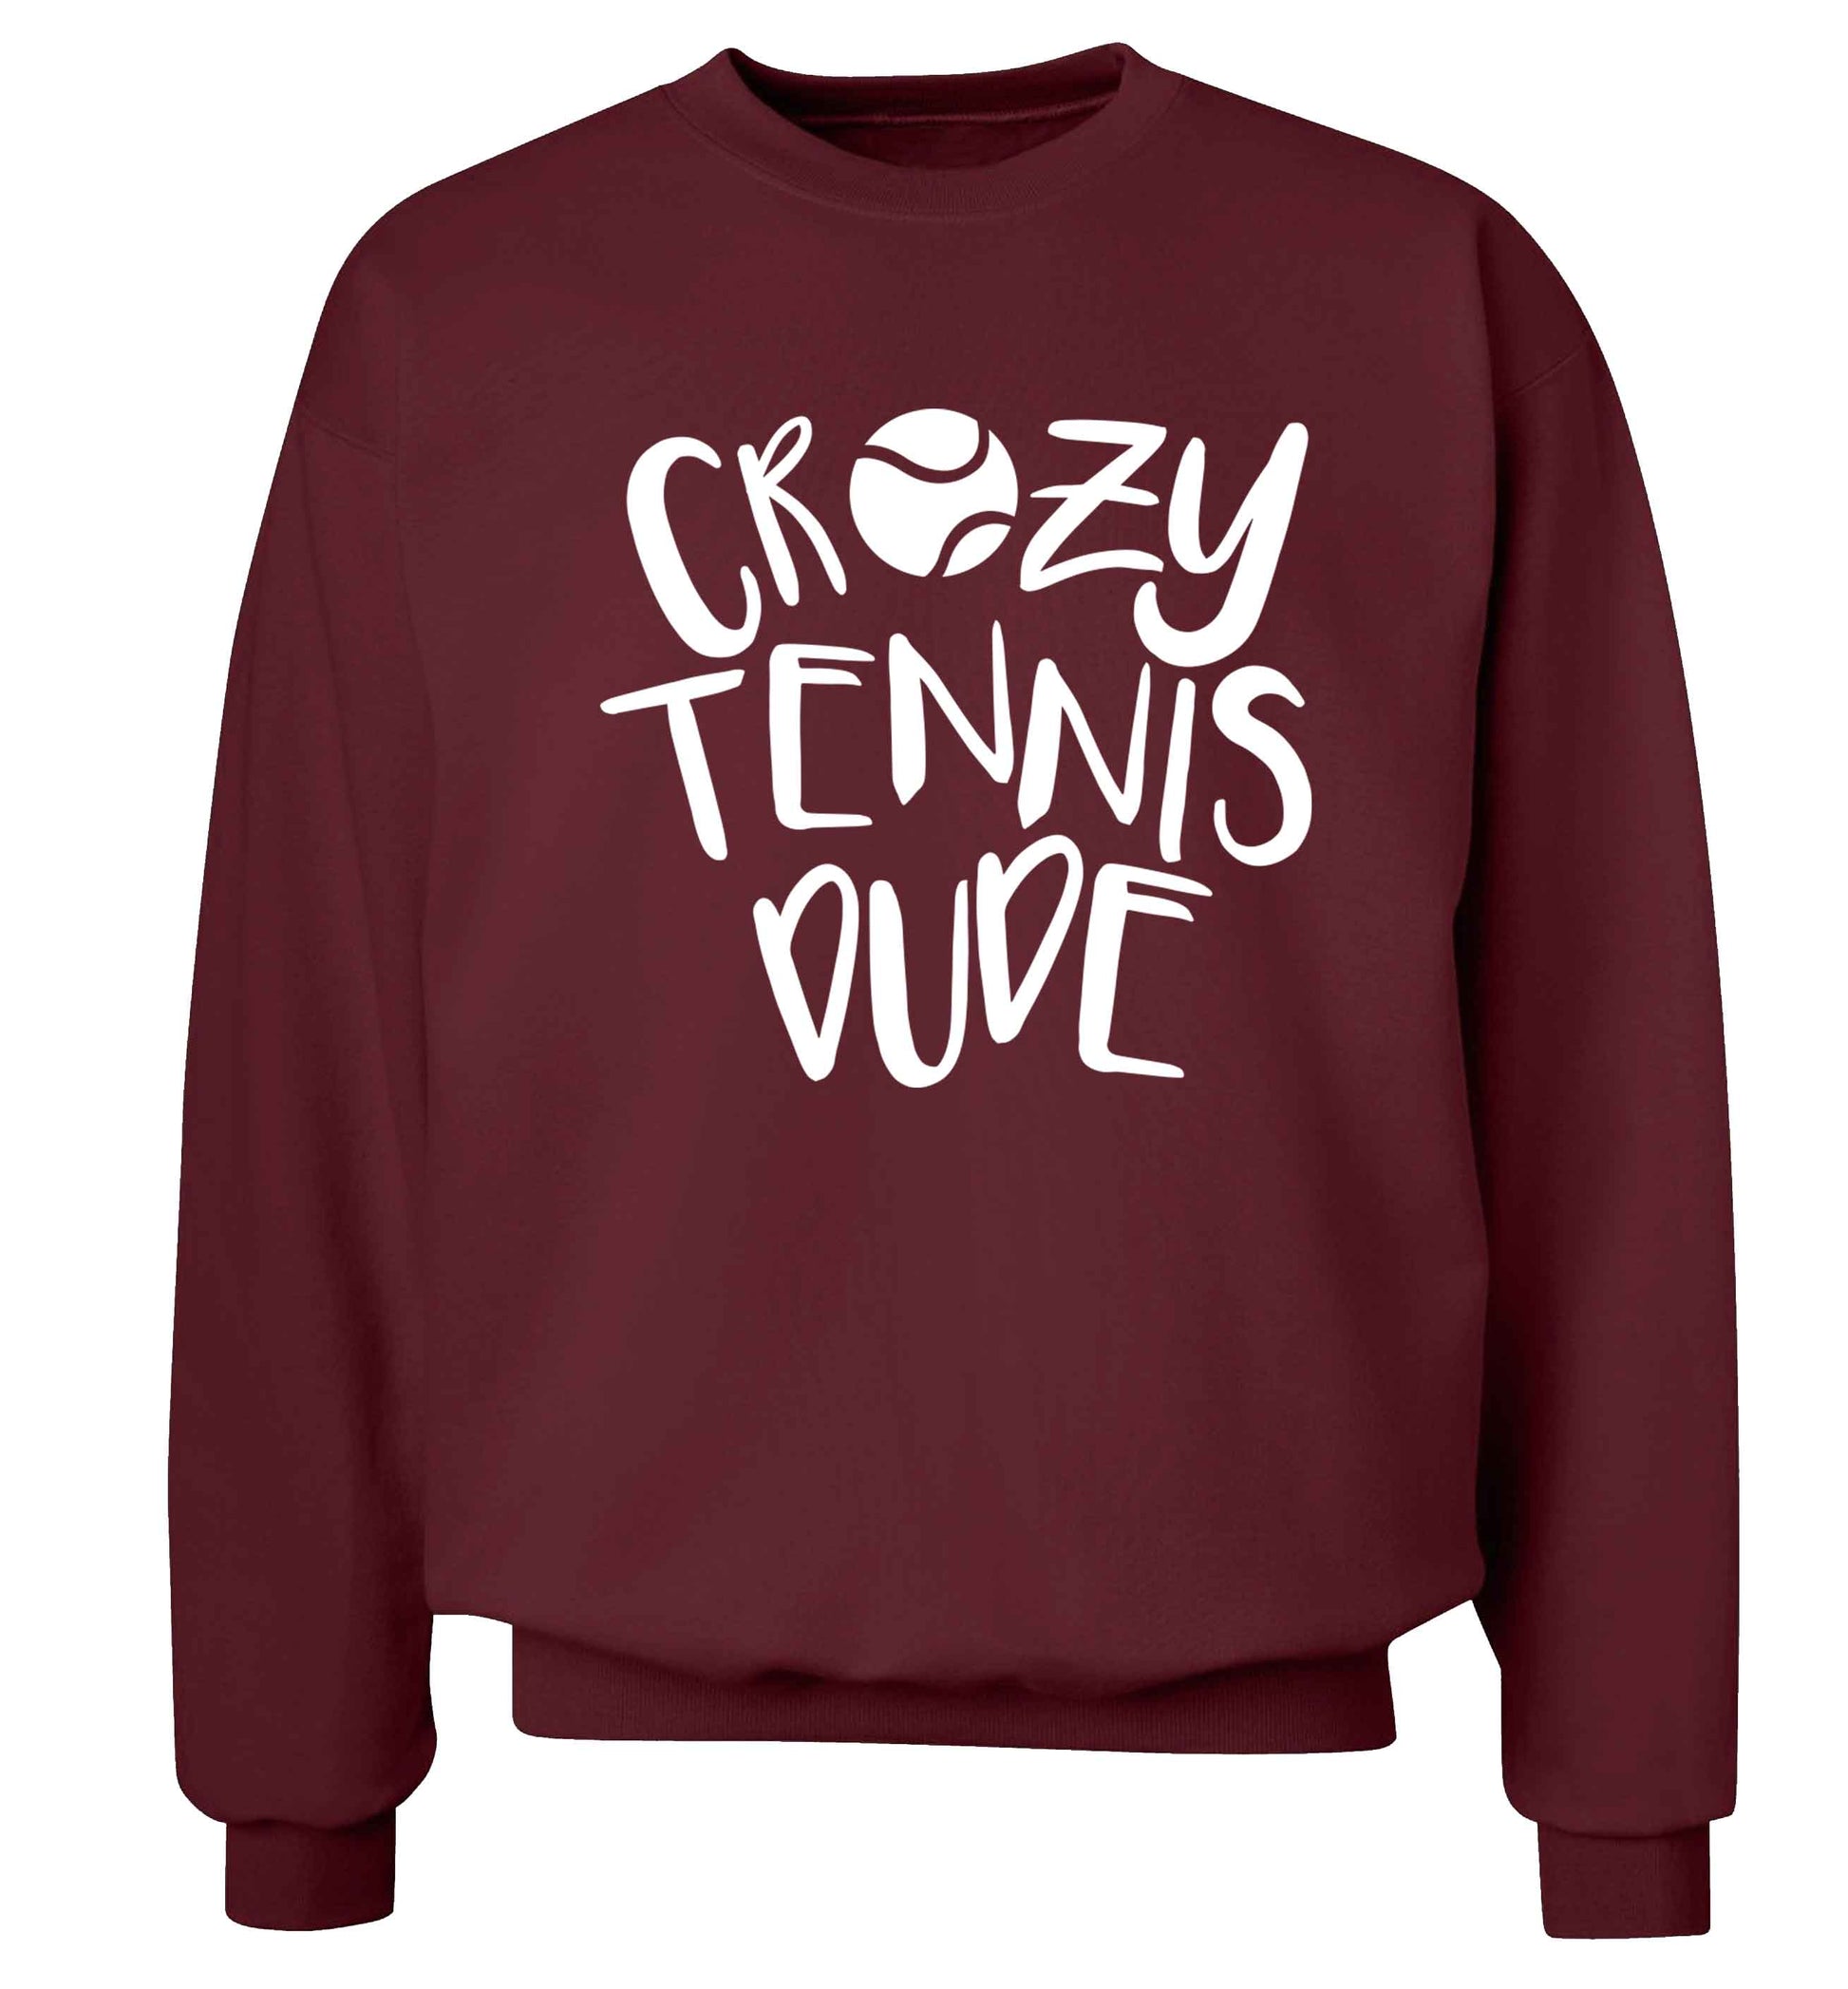 Crazy tennis dude Adult's unisex maroon Sweater 2XL